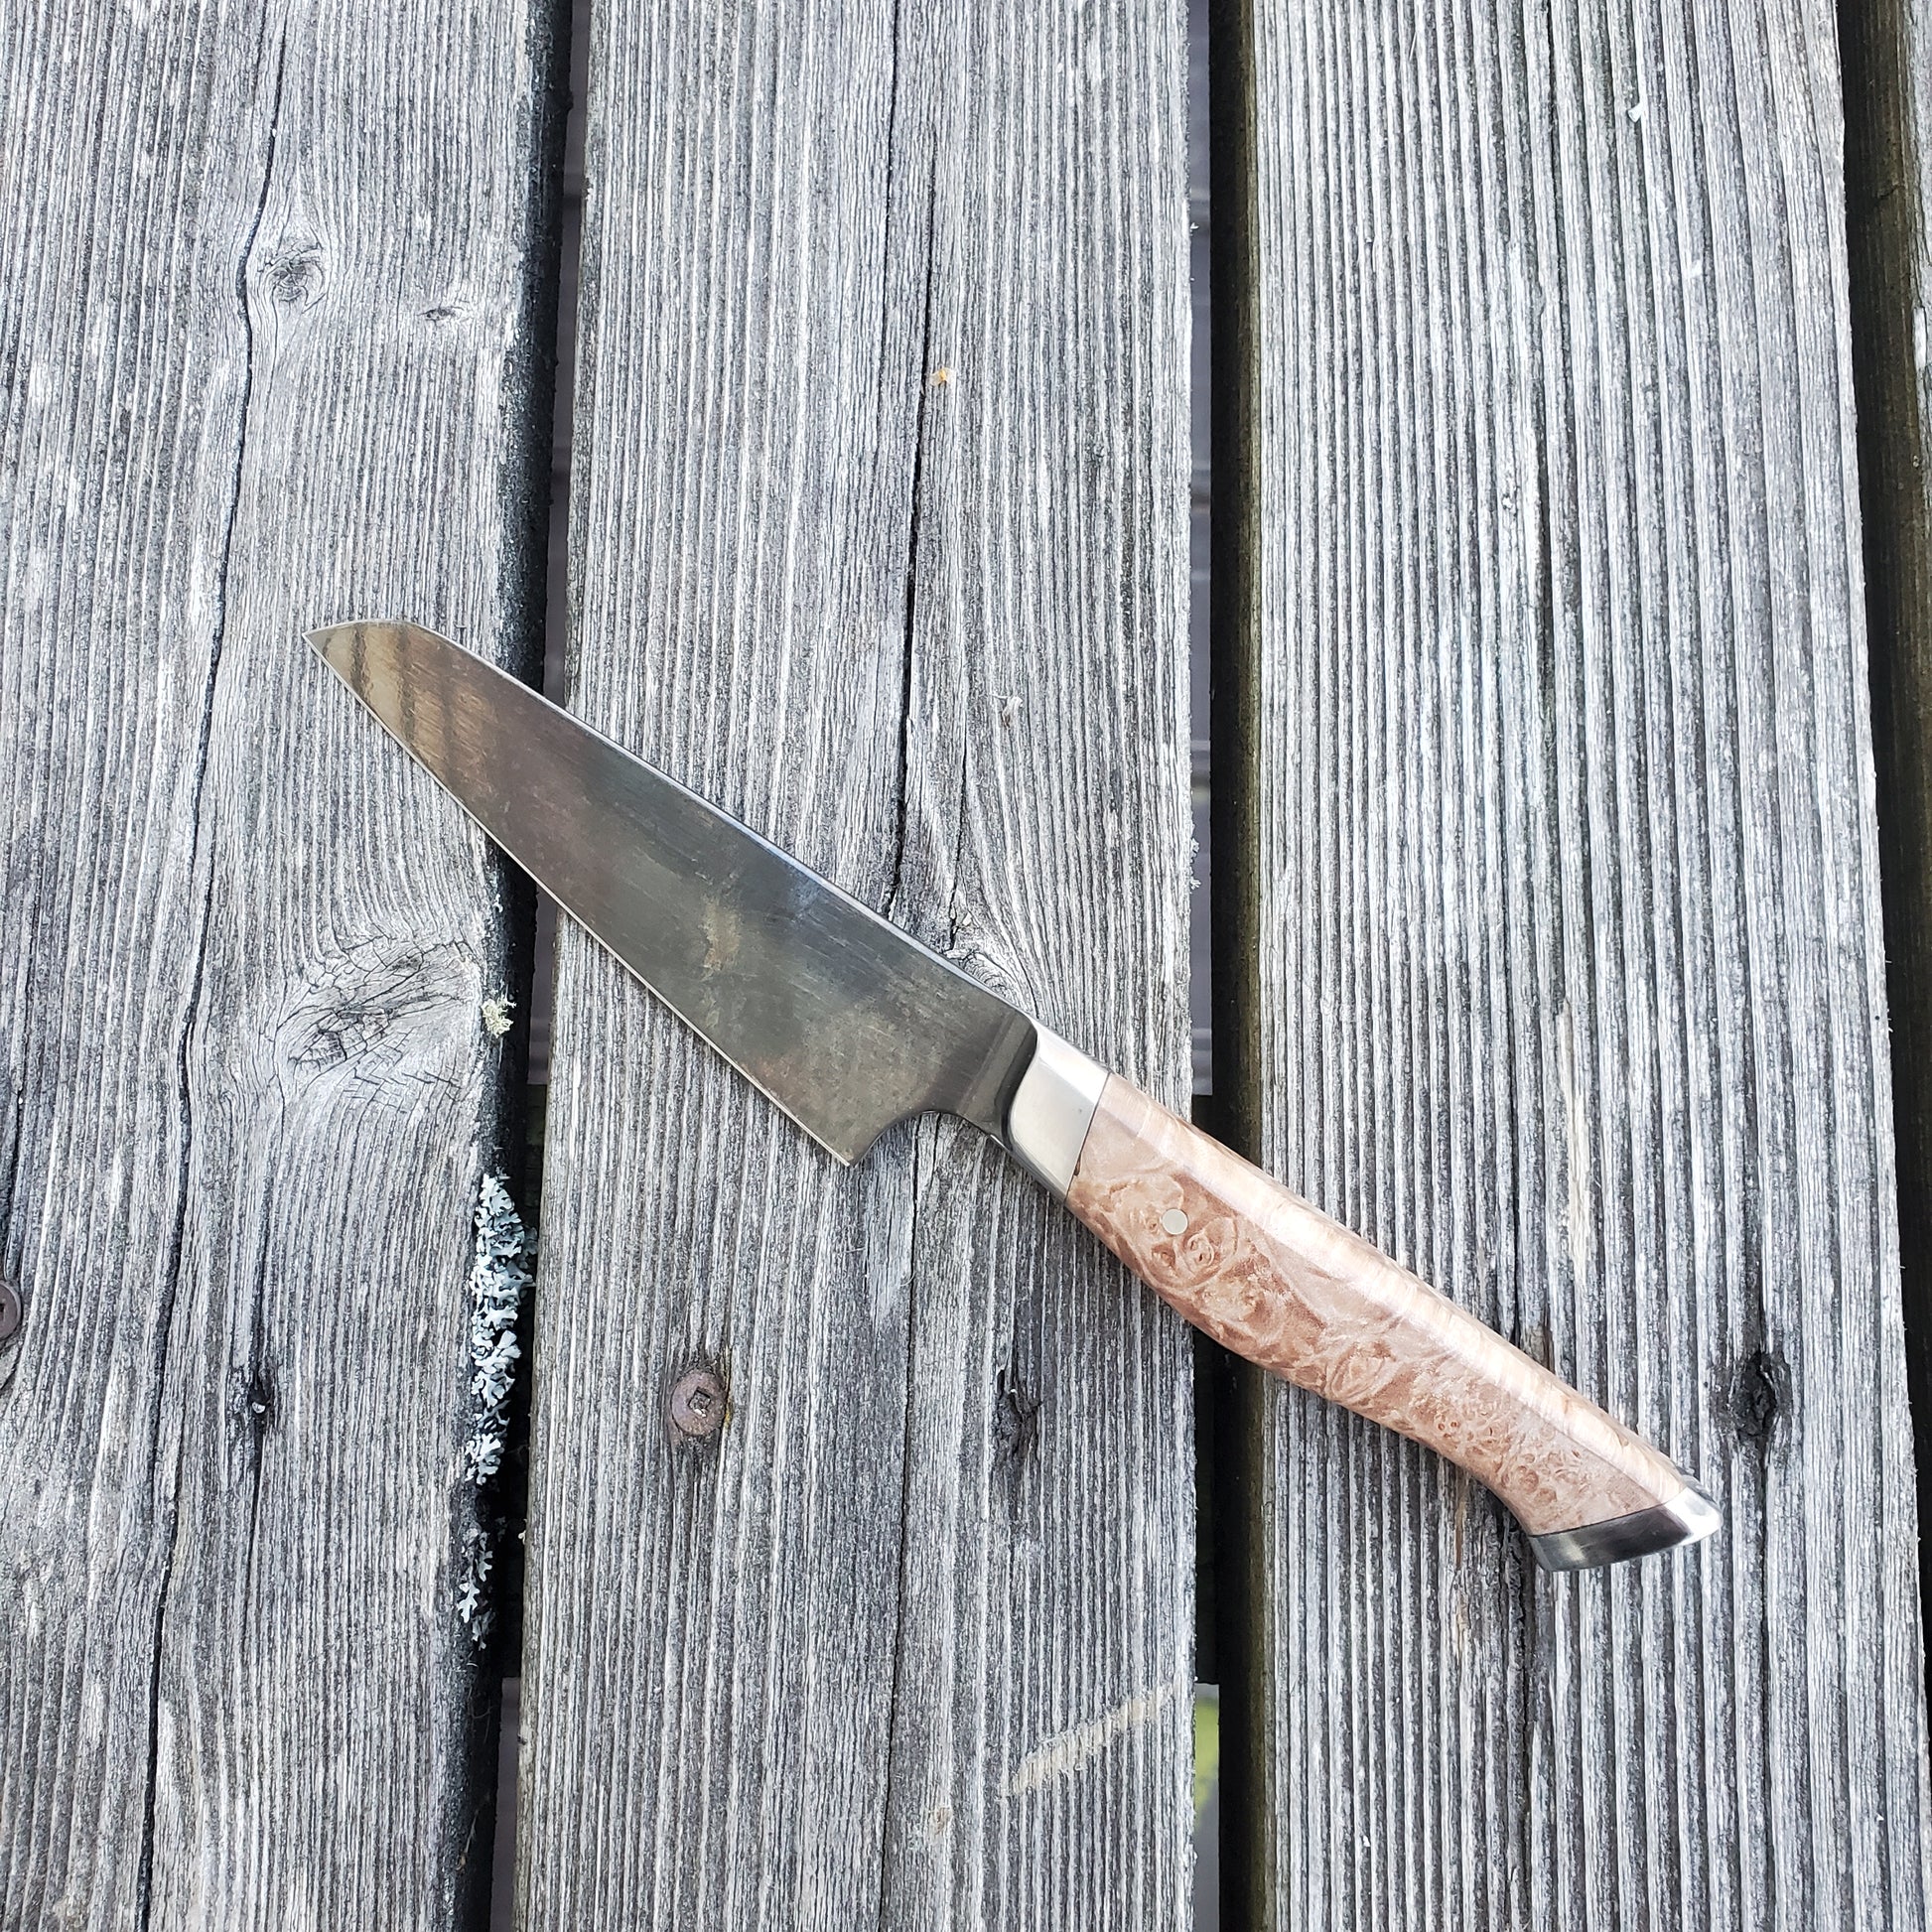 4 Inch Paring Knife - Steelport Knife Co. – Element Knife Company